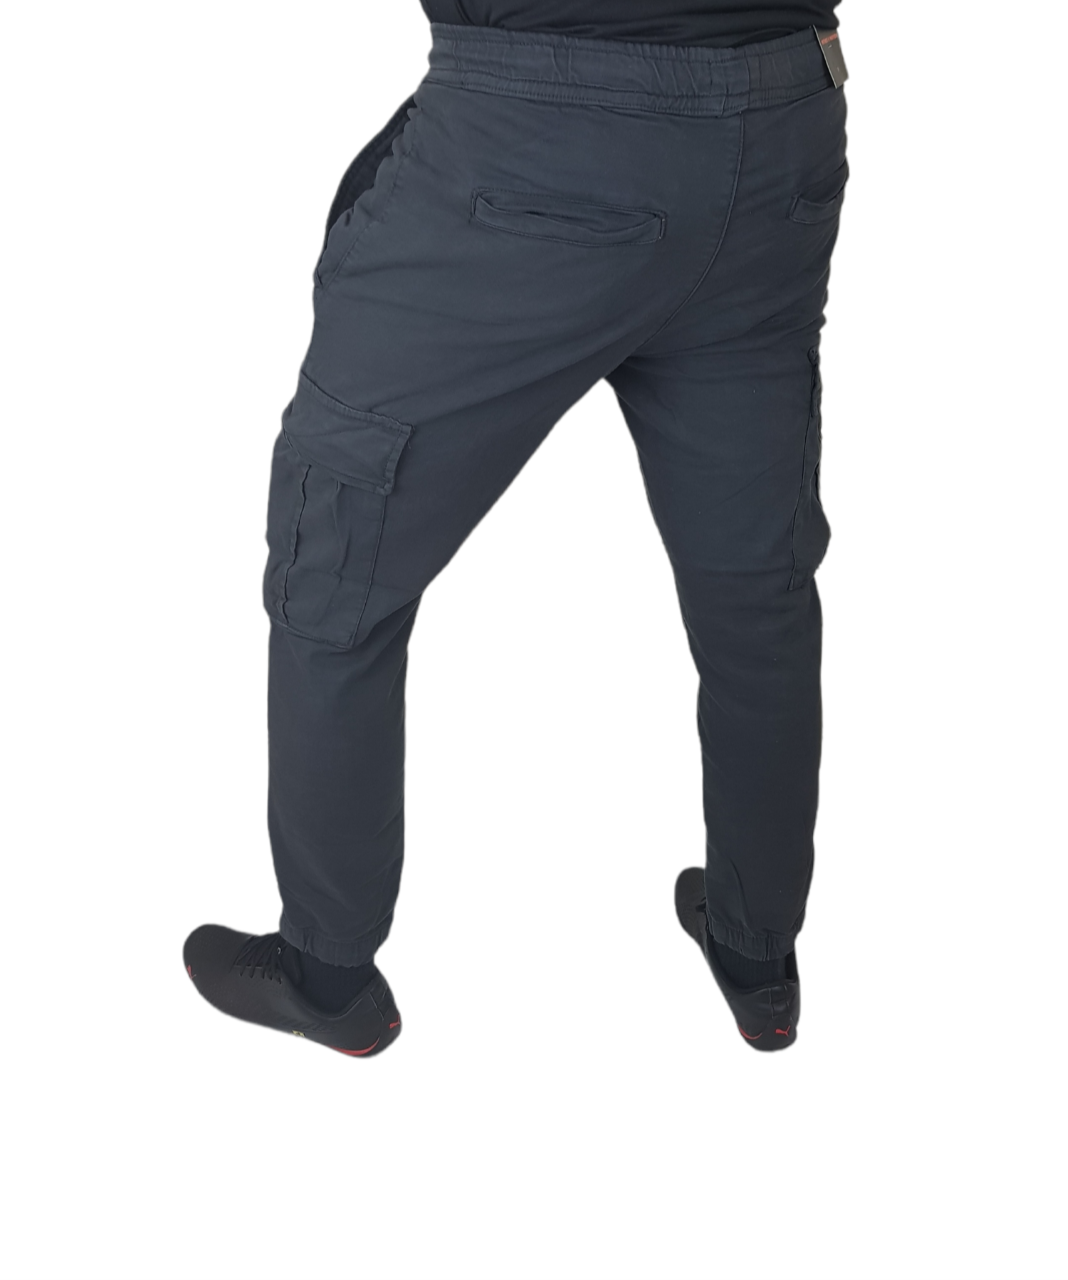 Men's Cotton Stretch Cargo Pants Charcoal Grey